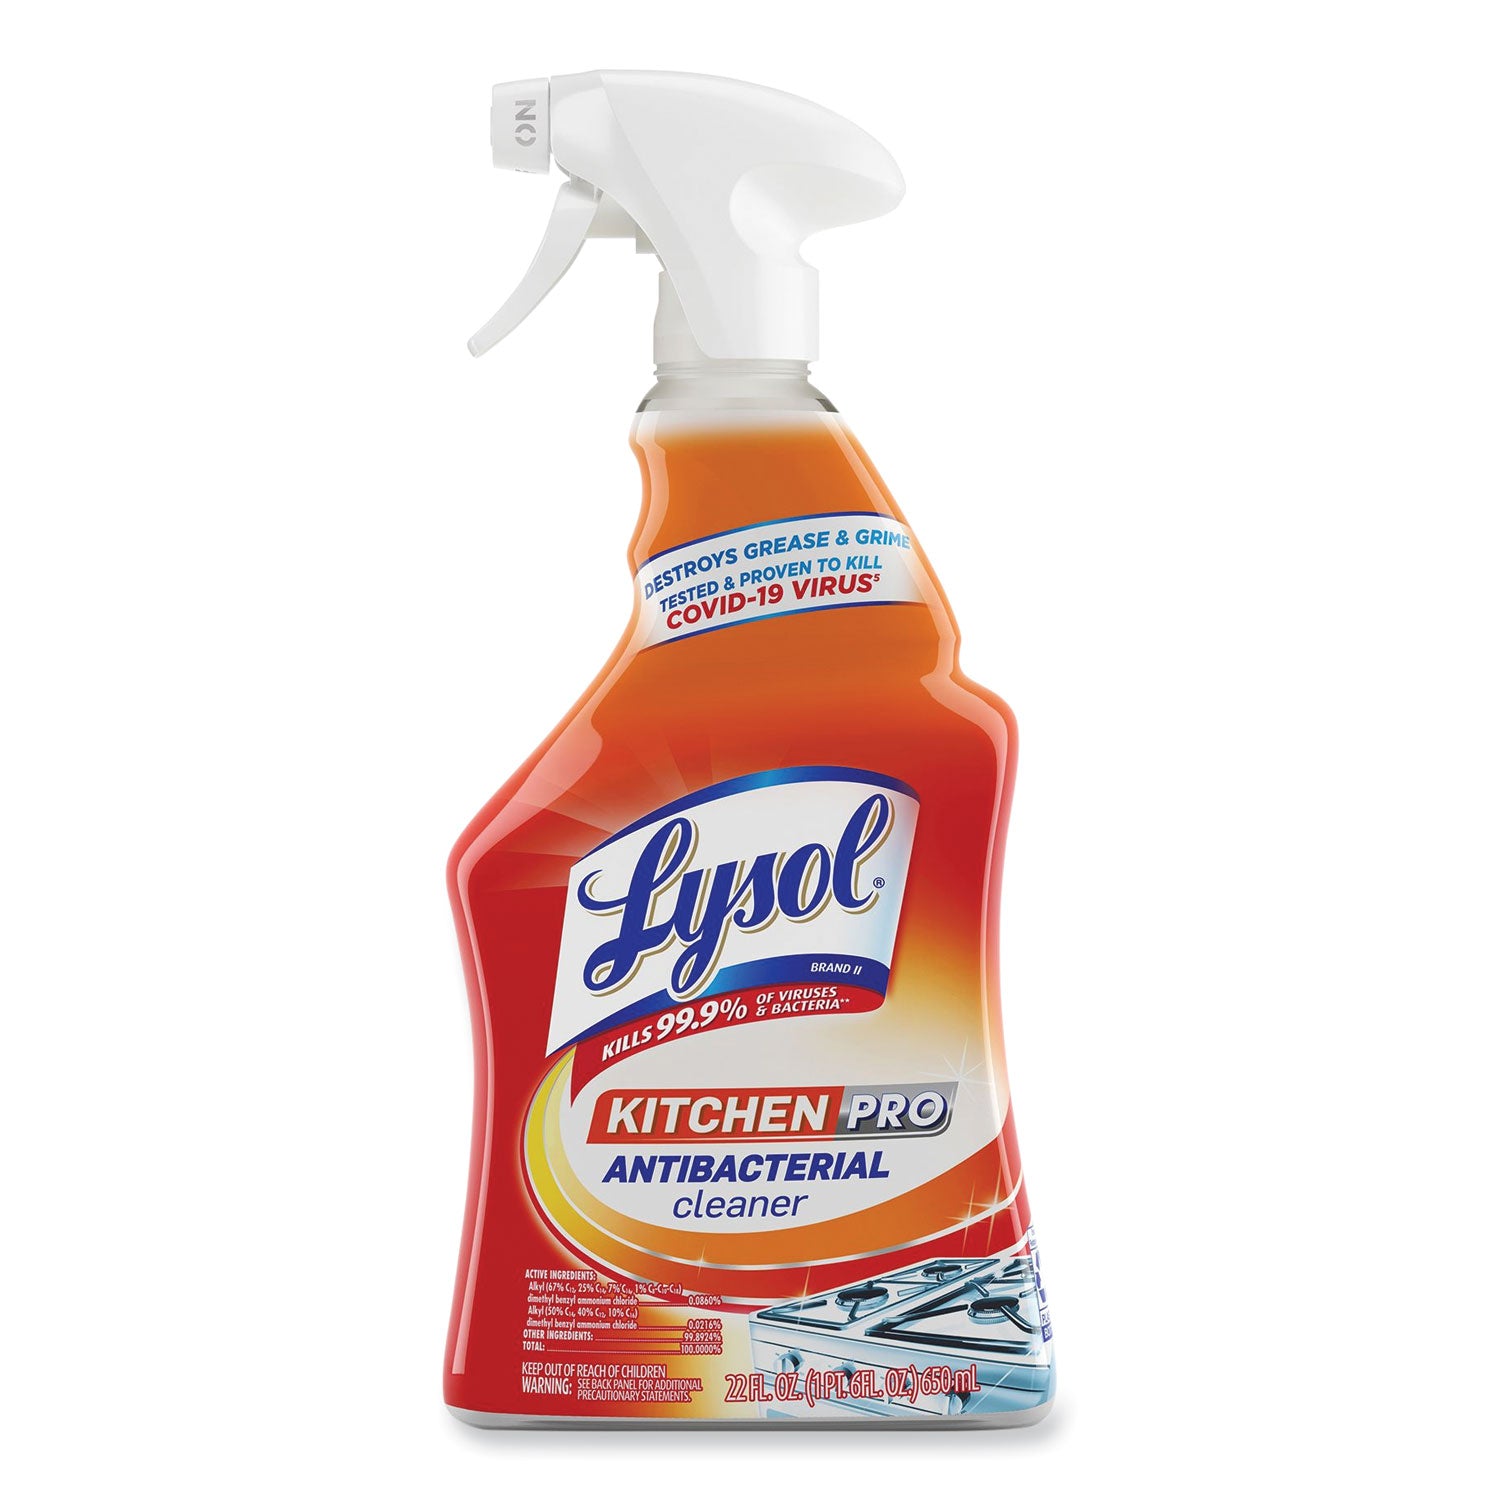 kitchen-pro-antibacterial-cleaner-citrus-scent-22-oz-spray-bottle_rac79556ea - 1